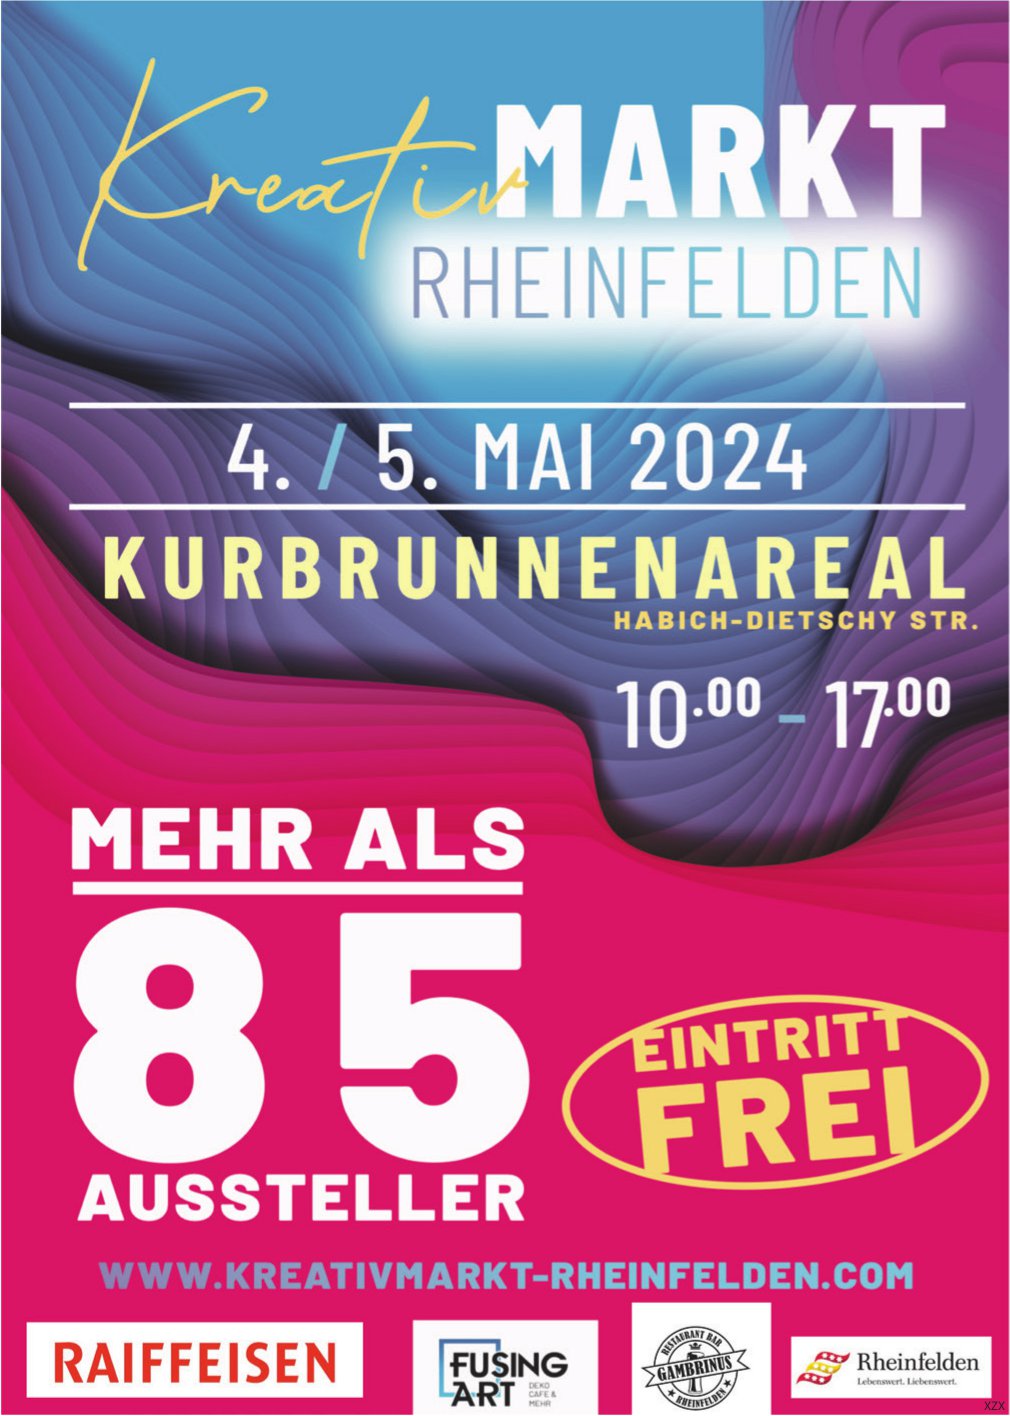 Kreativ Markt, 4. und 5. Mai, Kurbrunnenareal, Rheinfelden